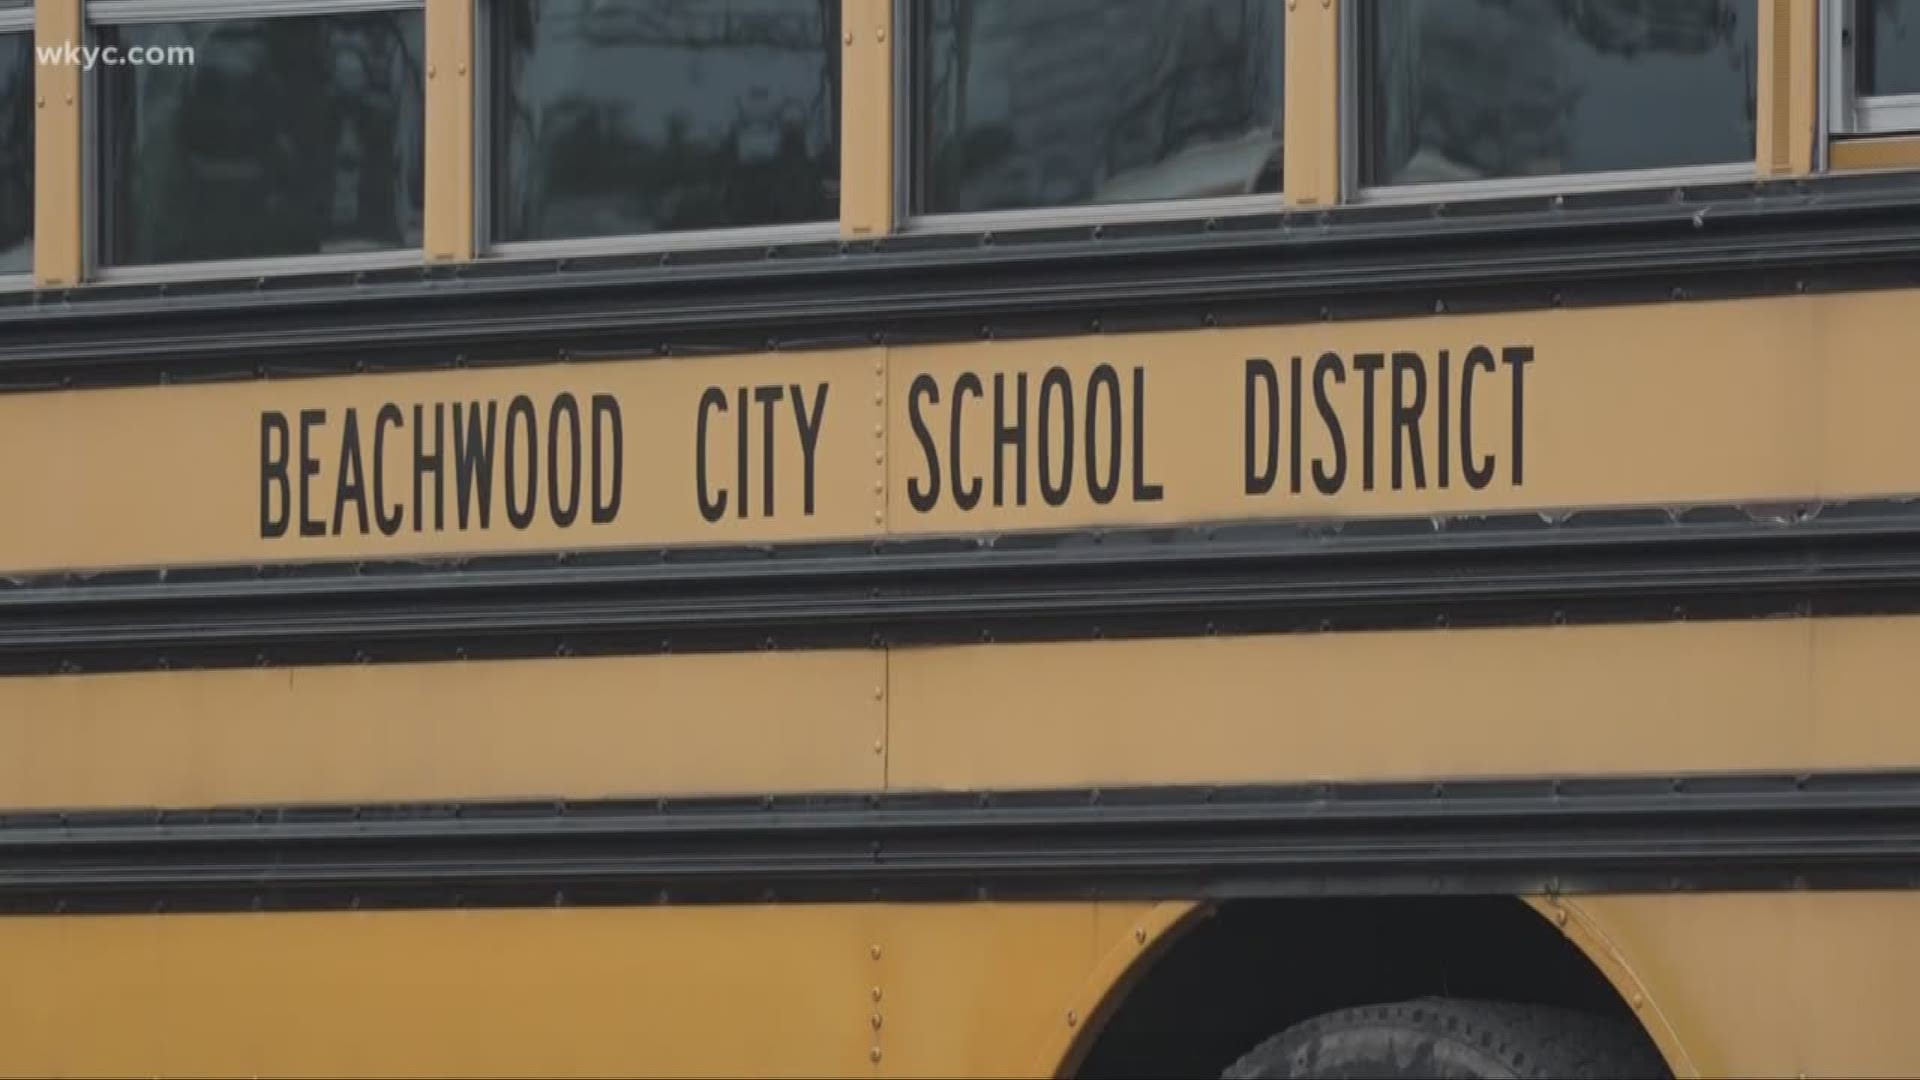 Beachwood will fund seat belts on school buses